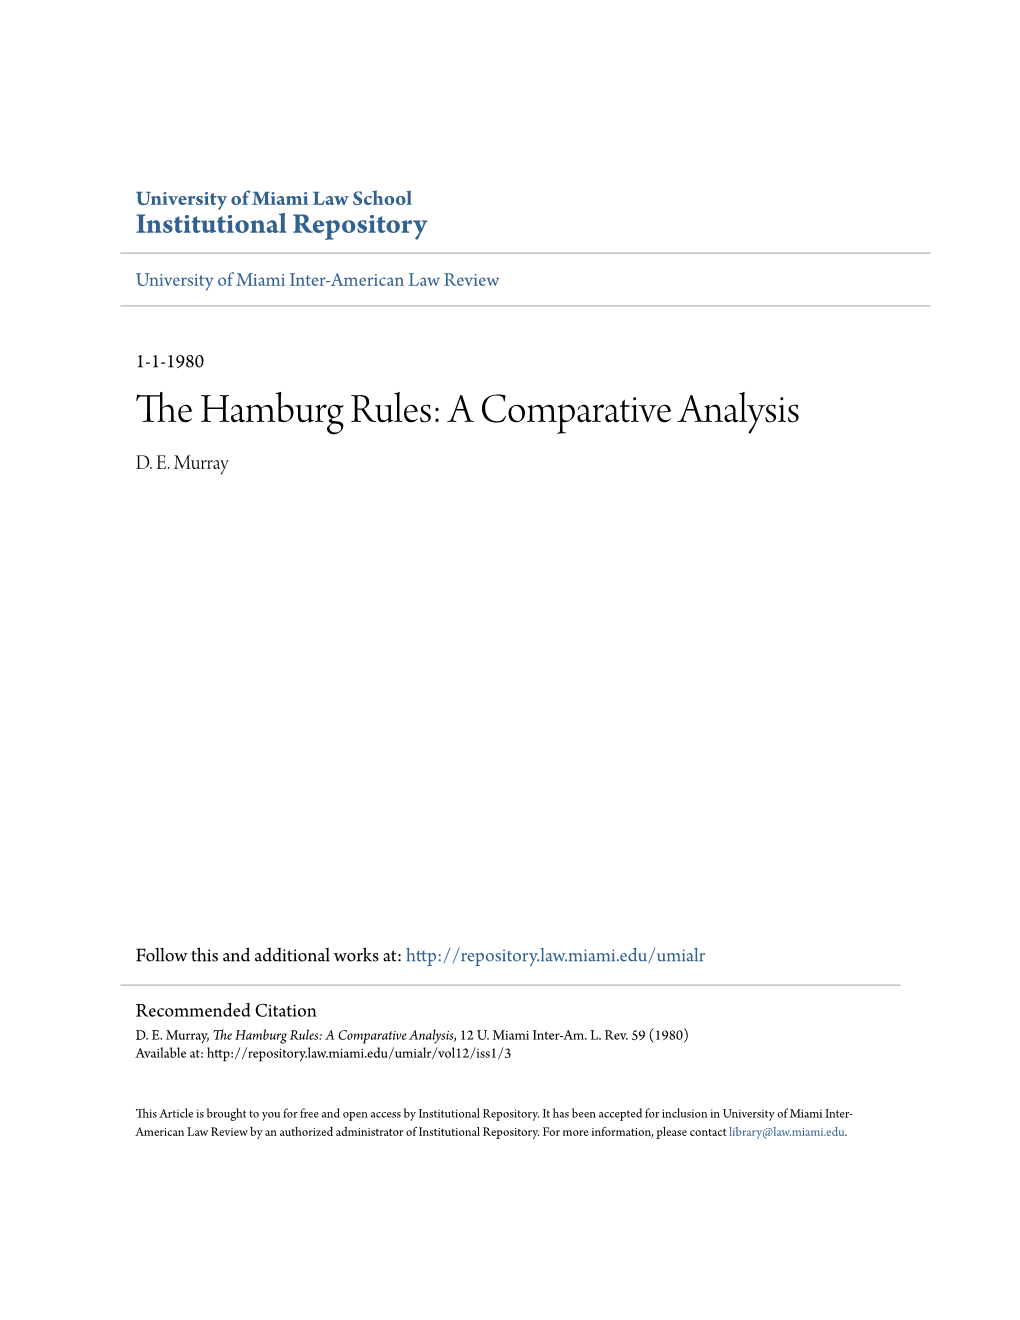 The Hamburg Rules: a Comparative Analysis, 12 U